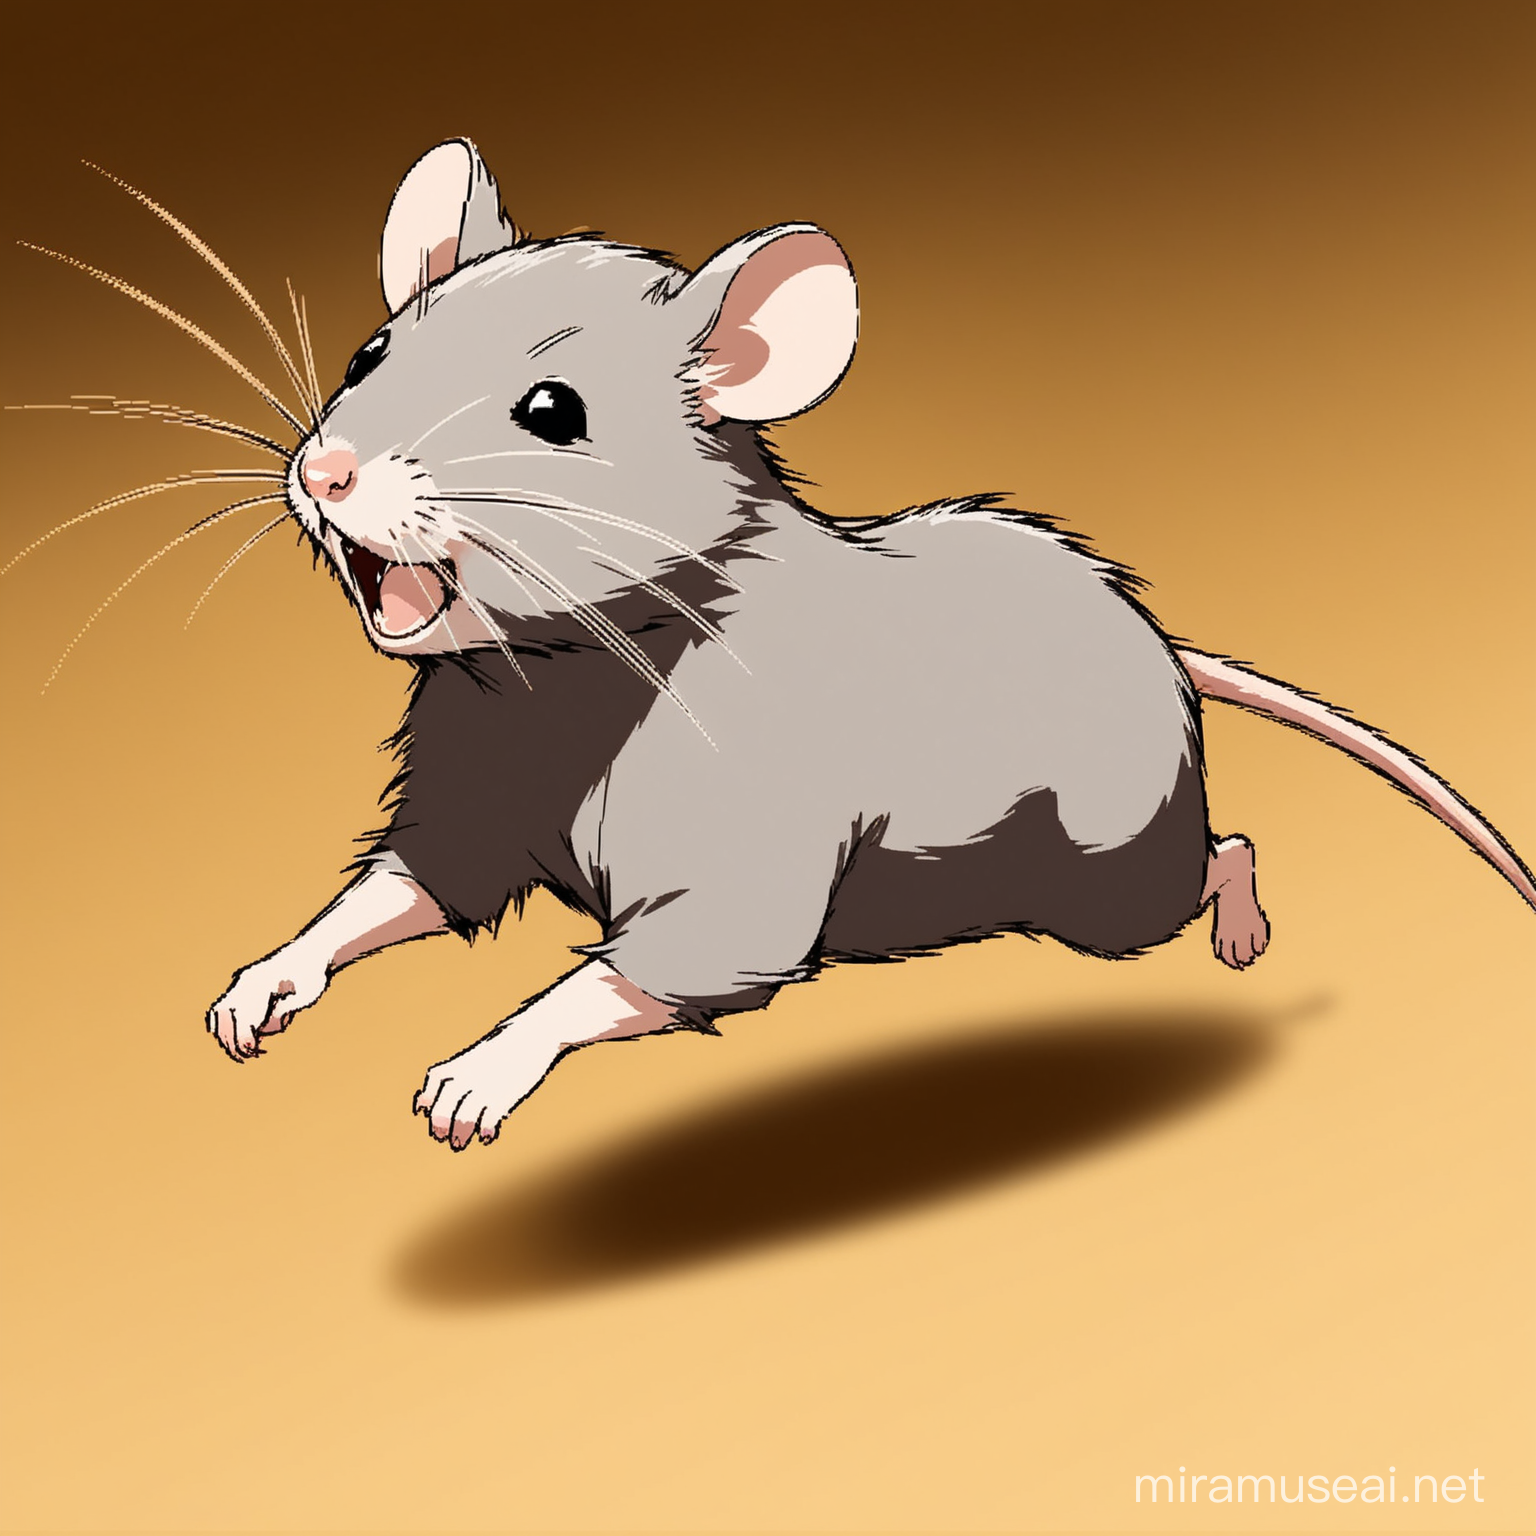 Animated Illustration AshColored Rat Chasing a SixYearOld Boy